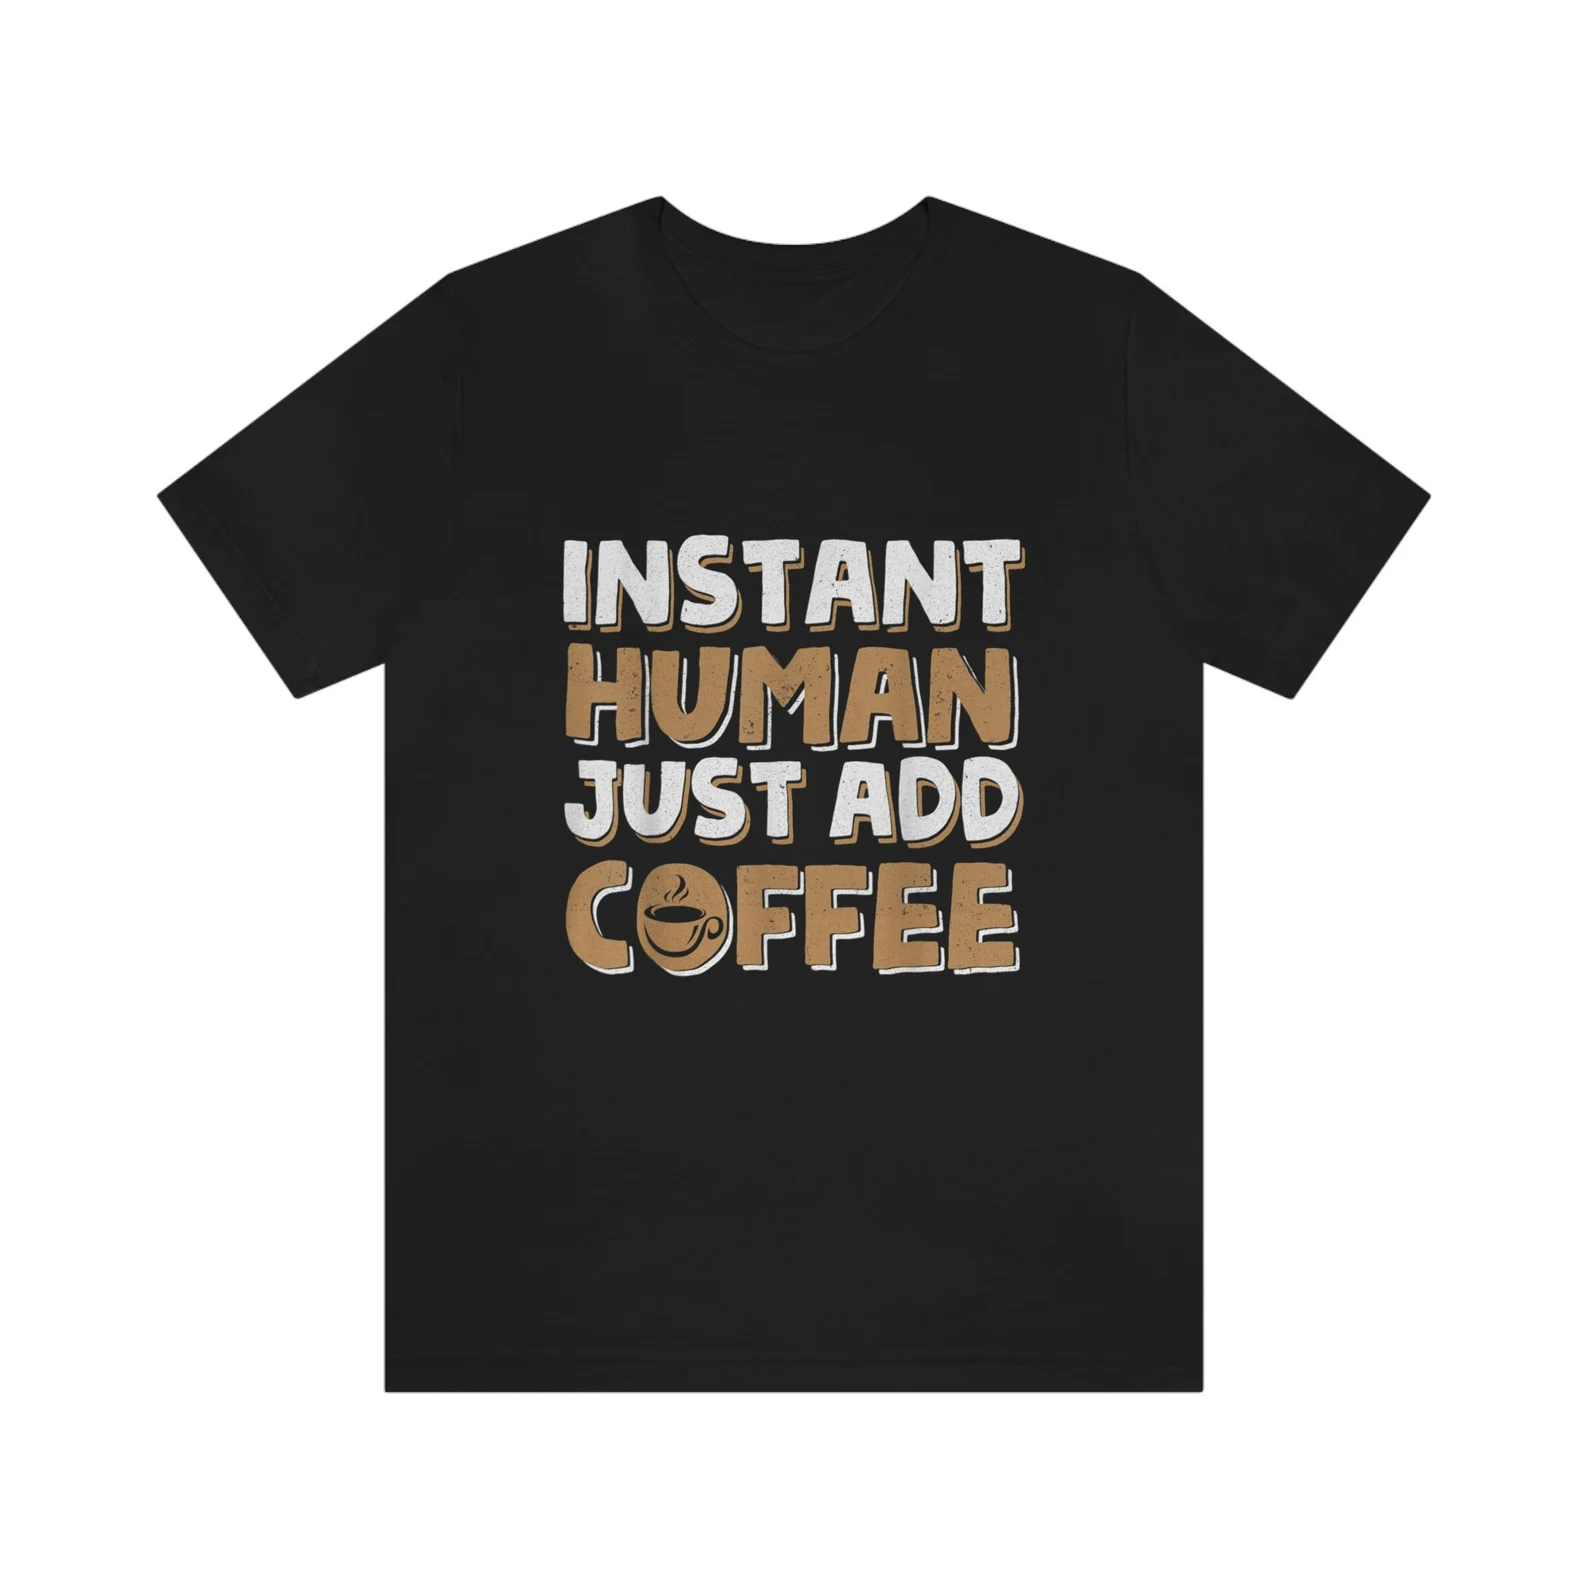 "Instant Human, Just Add Coffee" T-shirt